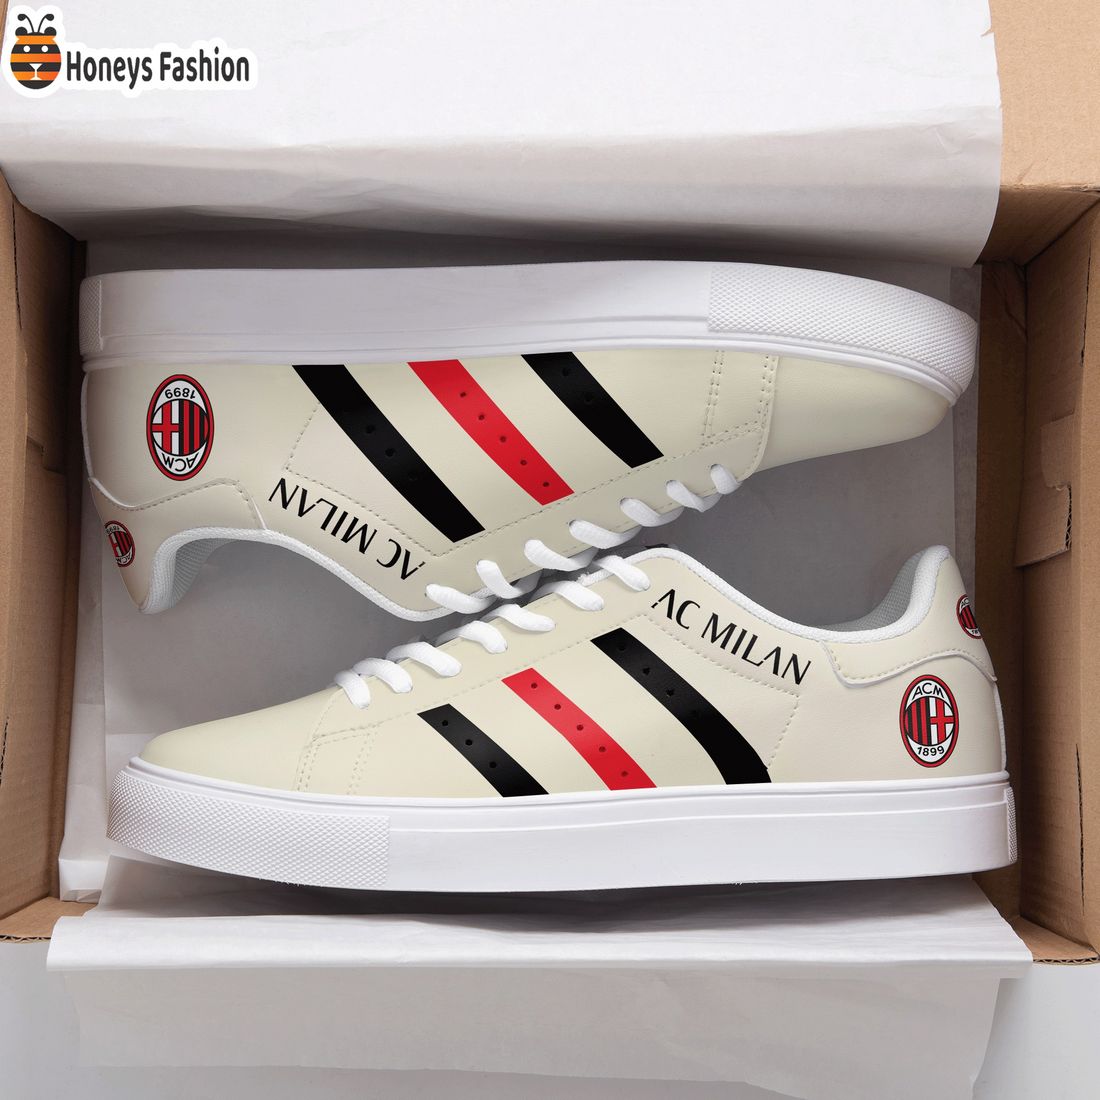 AC Milan 1899 Adidas Stan Smith Trainers